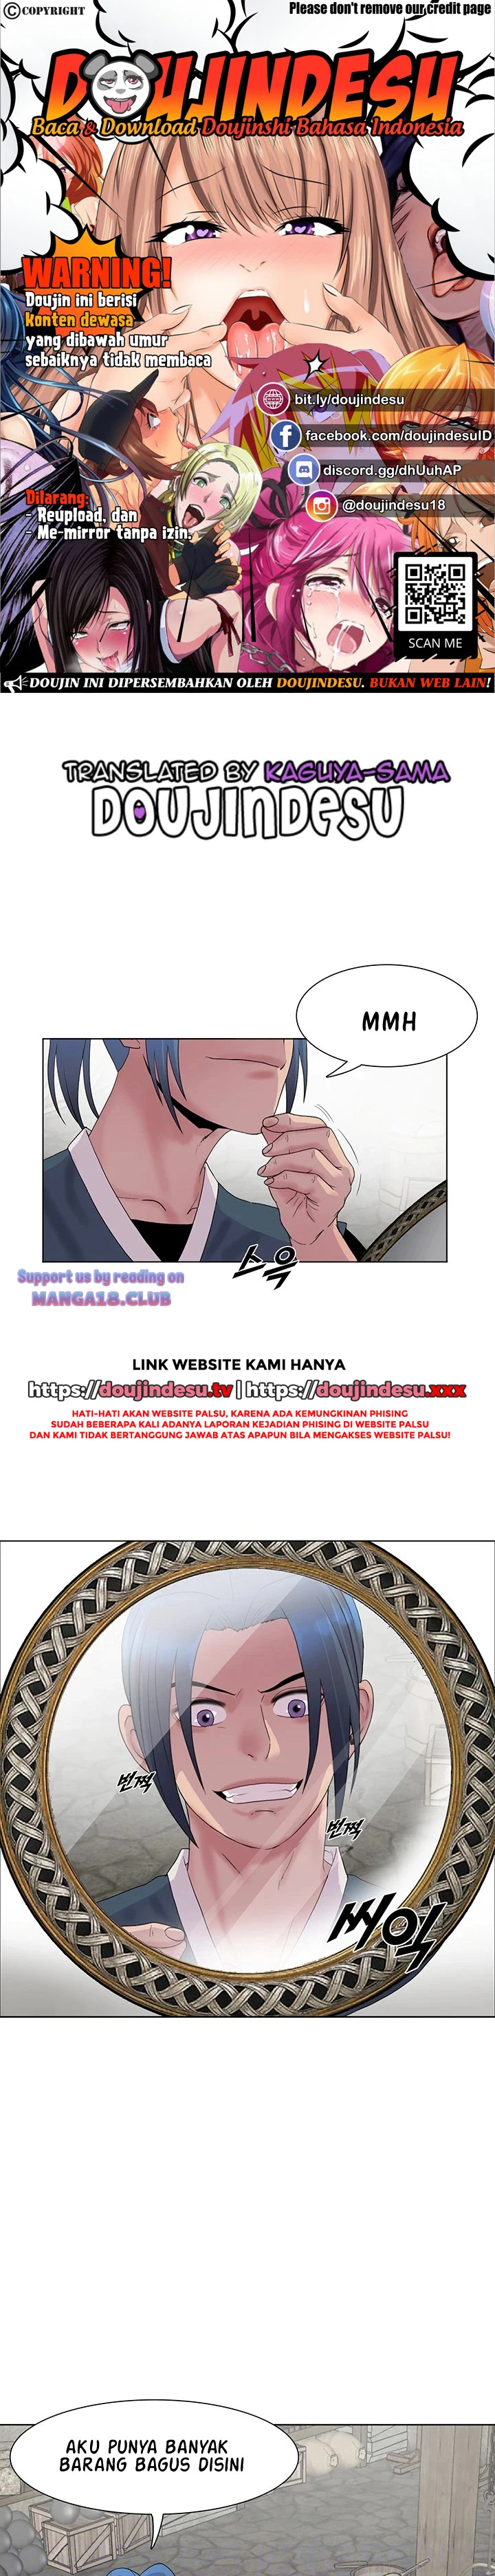 Rawmanga download free manga